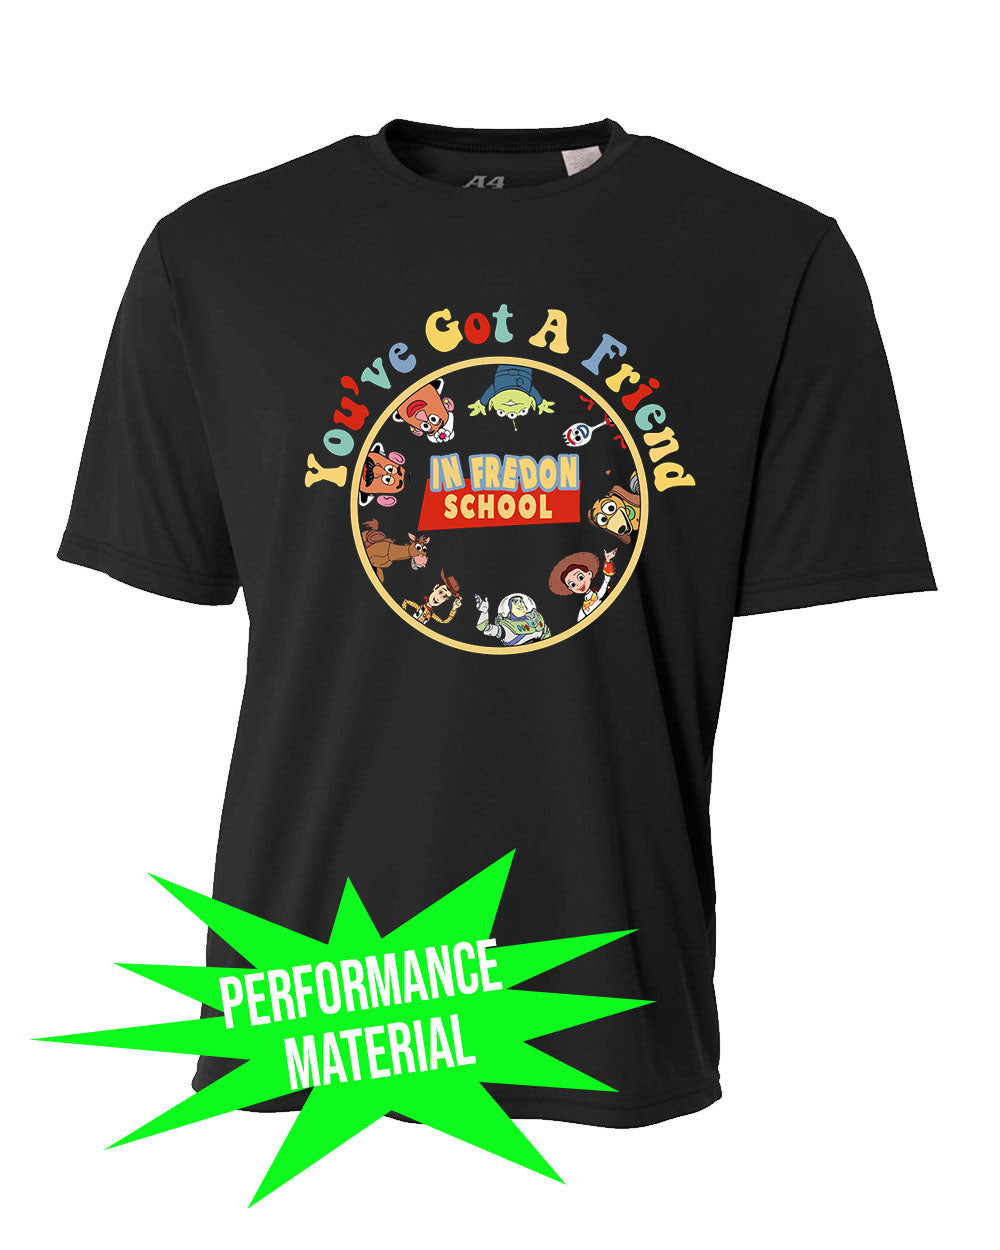 Fredon Performance Material design 11 T-Shirt